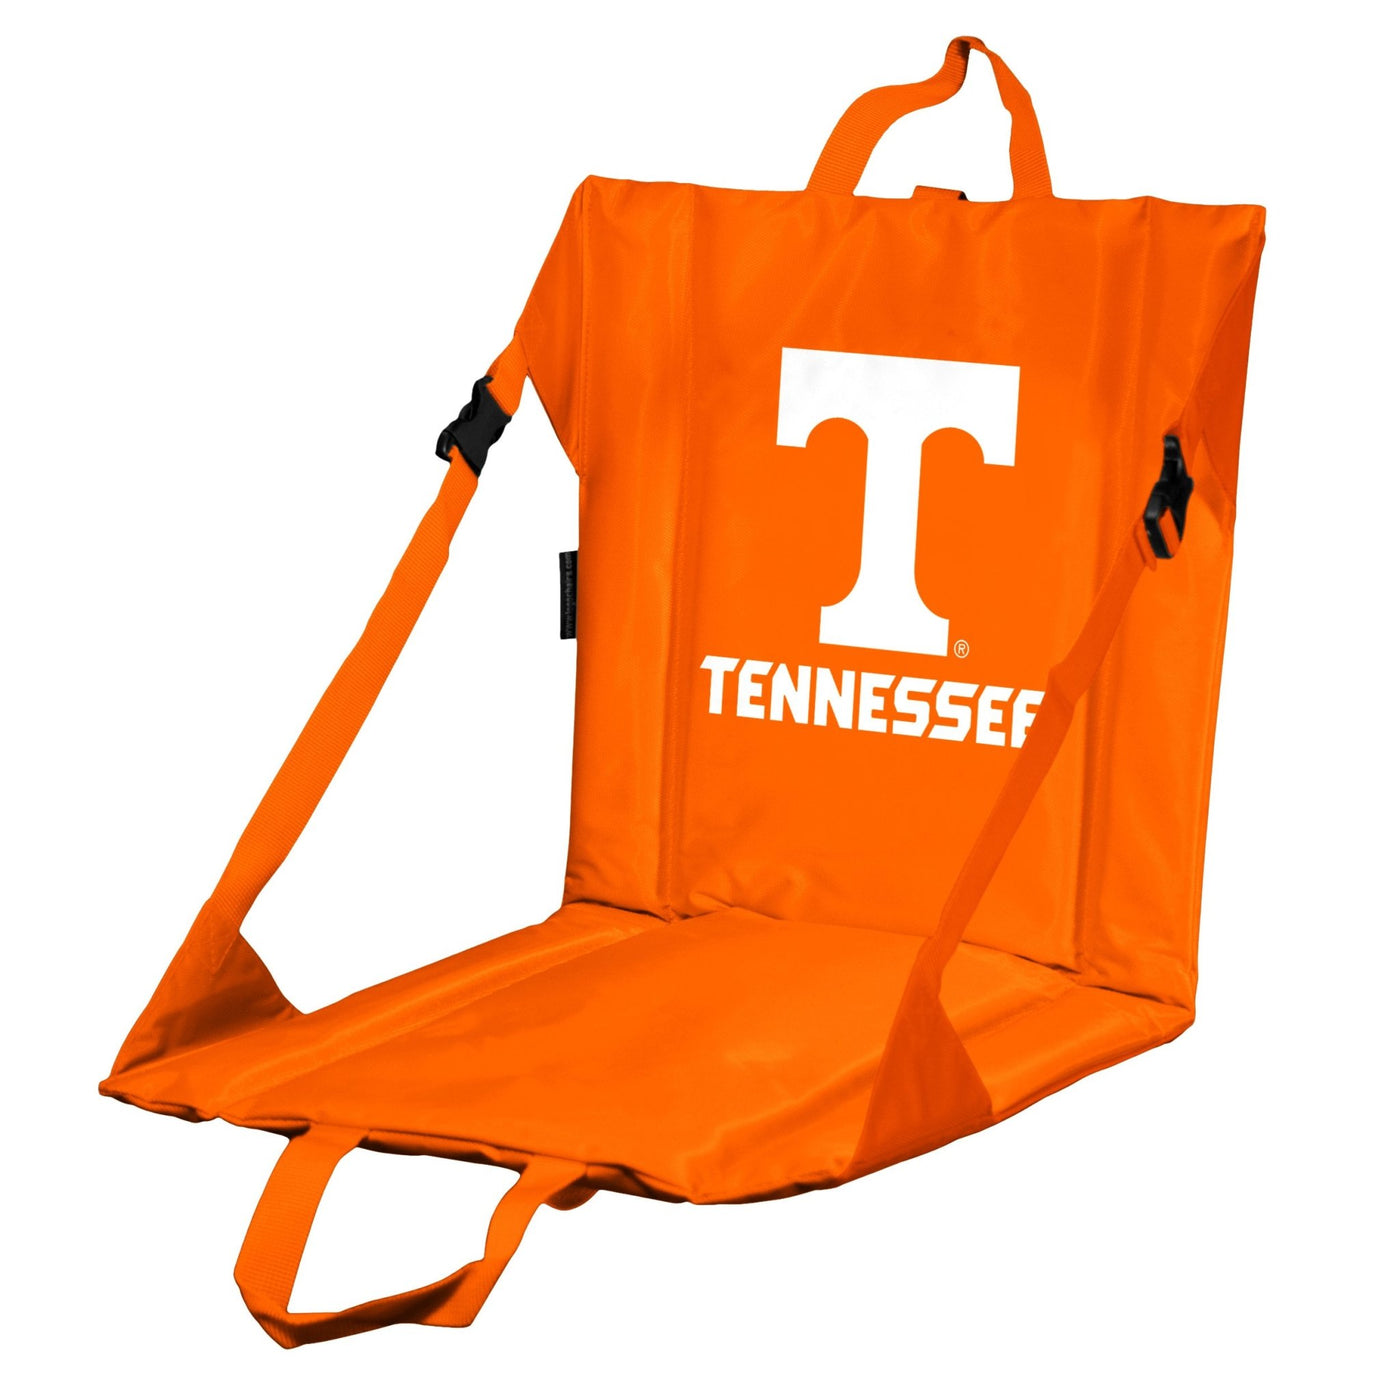 Tennessee Stadium Seat - Logo Brands